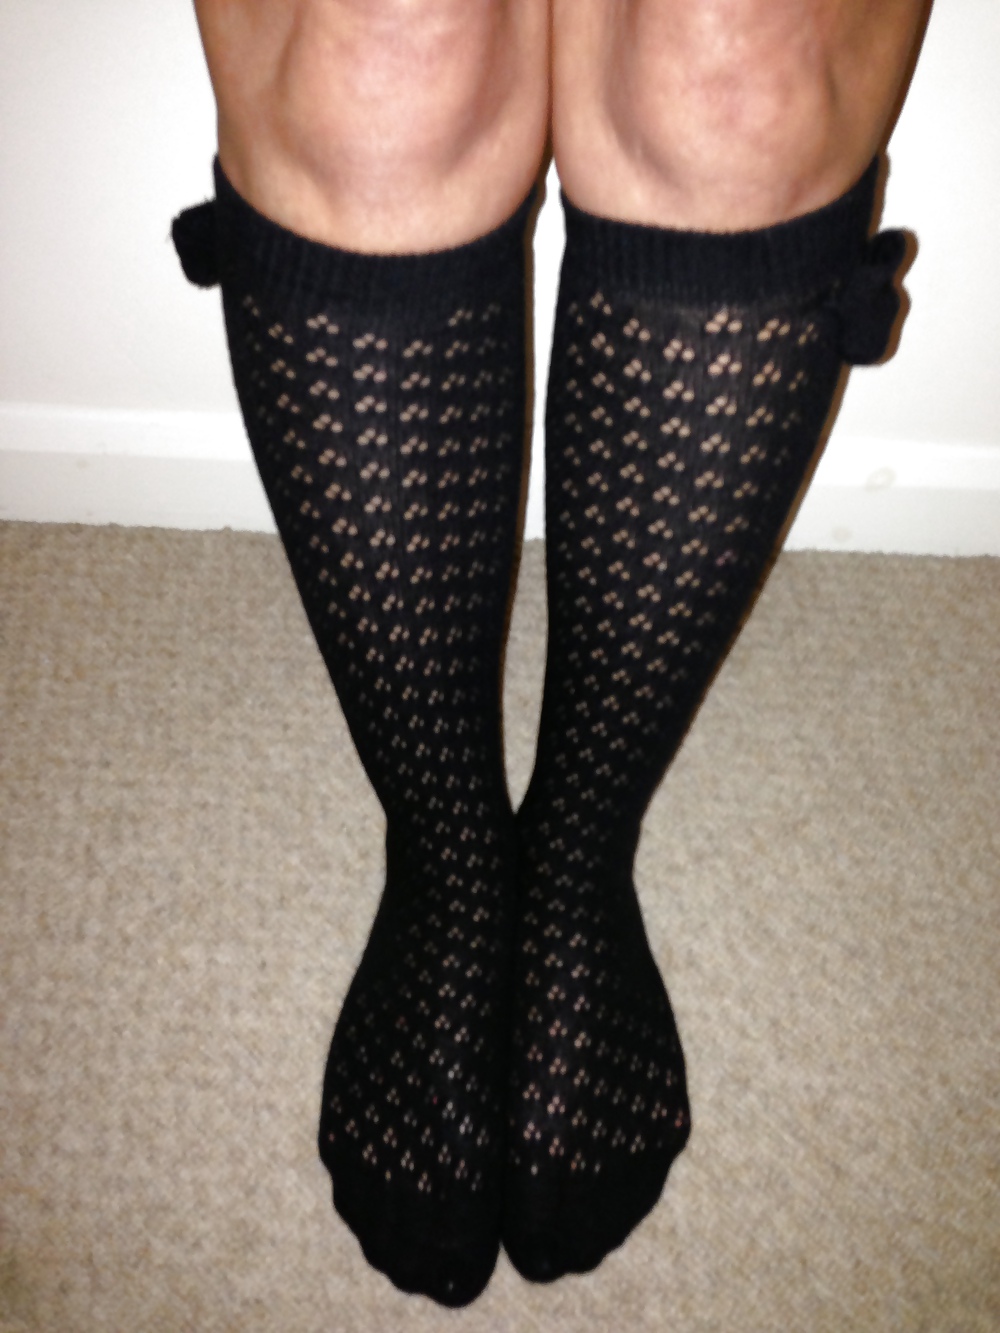 Jayne in sexy knee high socks b4 sally69 cam fun #16795511